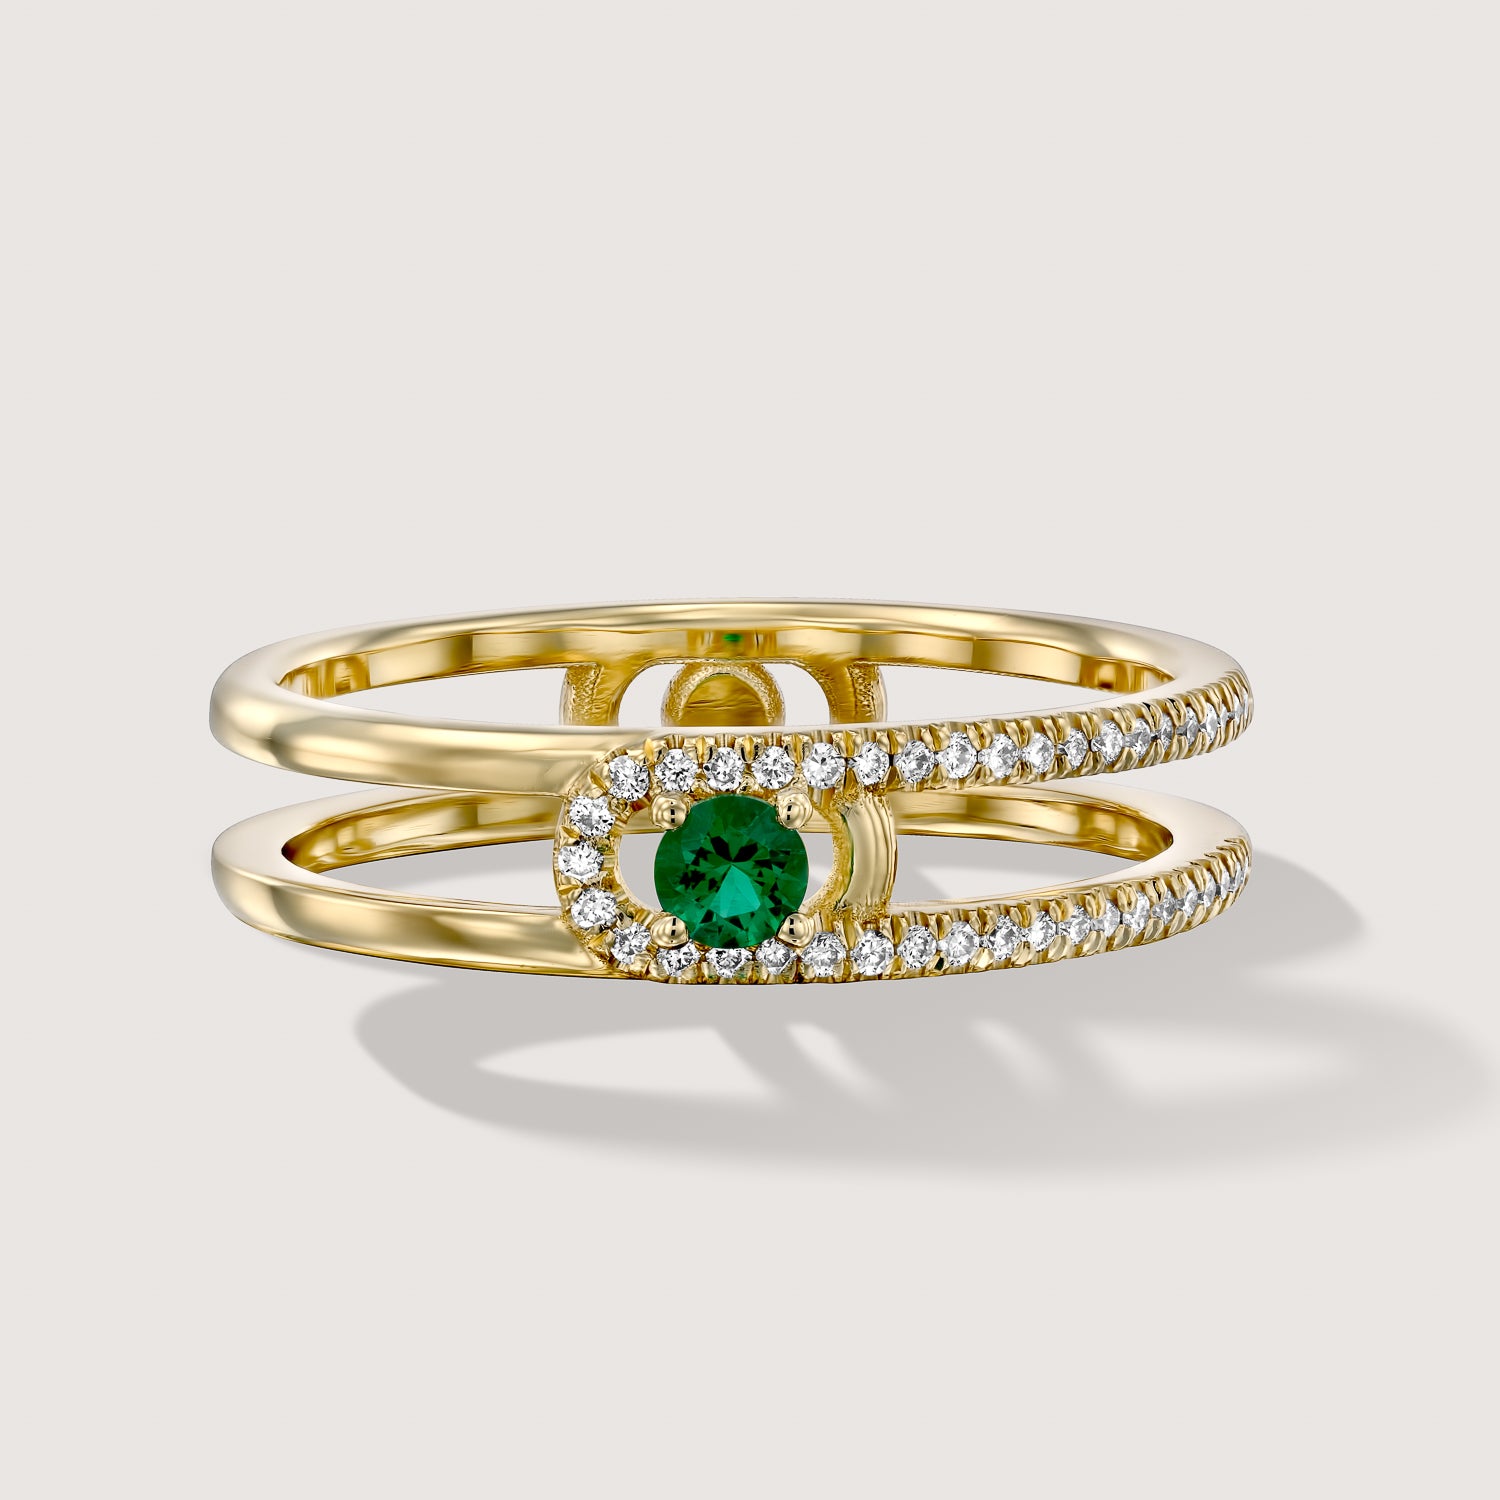 Ring 06 - Emerald & White Diamonds